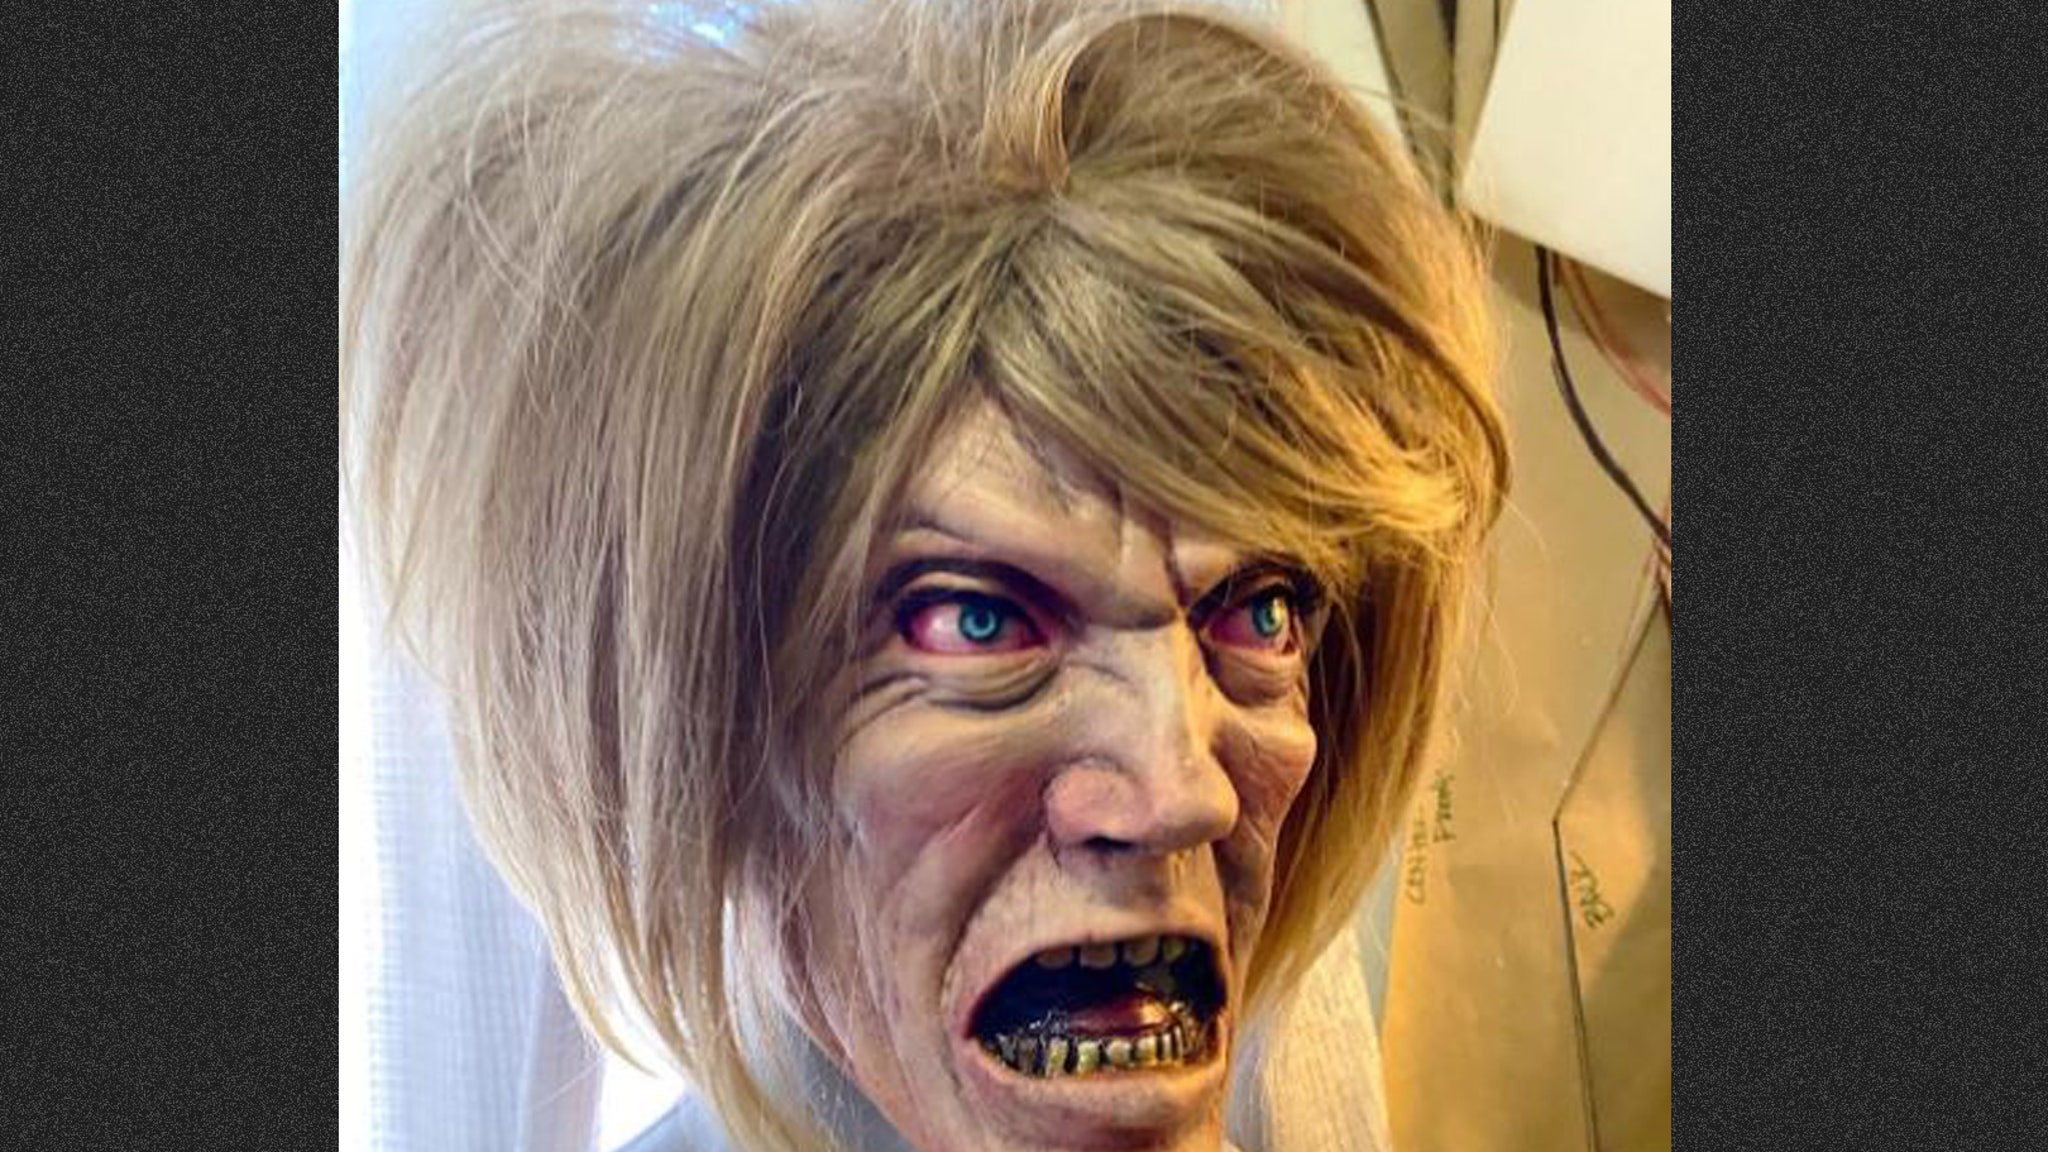 Karen Halloween Mask Artist Calls Creation 'Real Monster of 2020' - TooFab